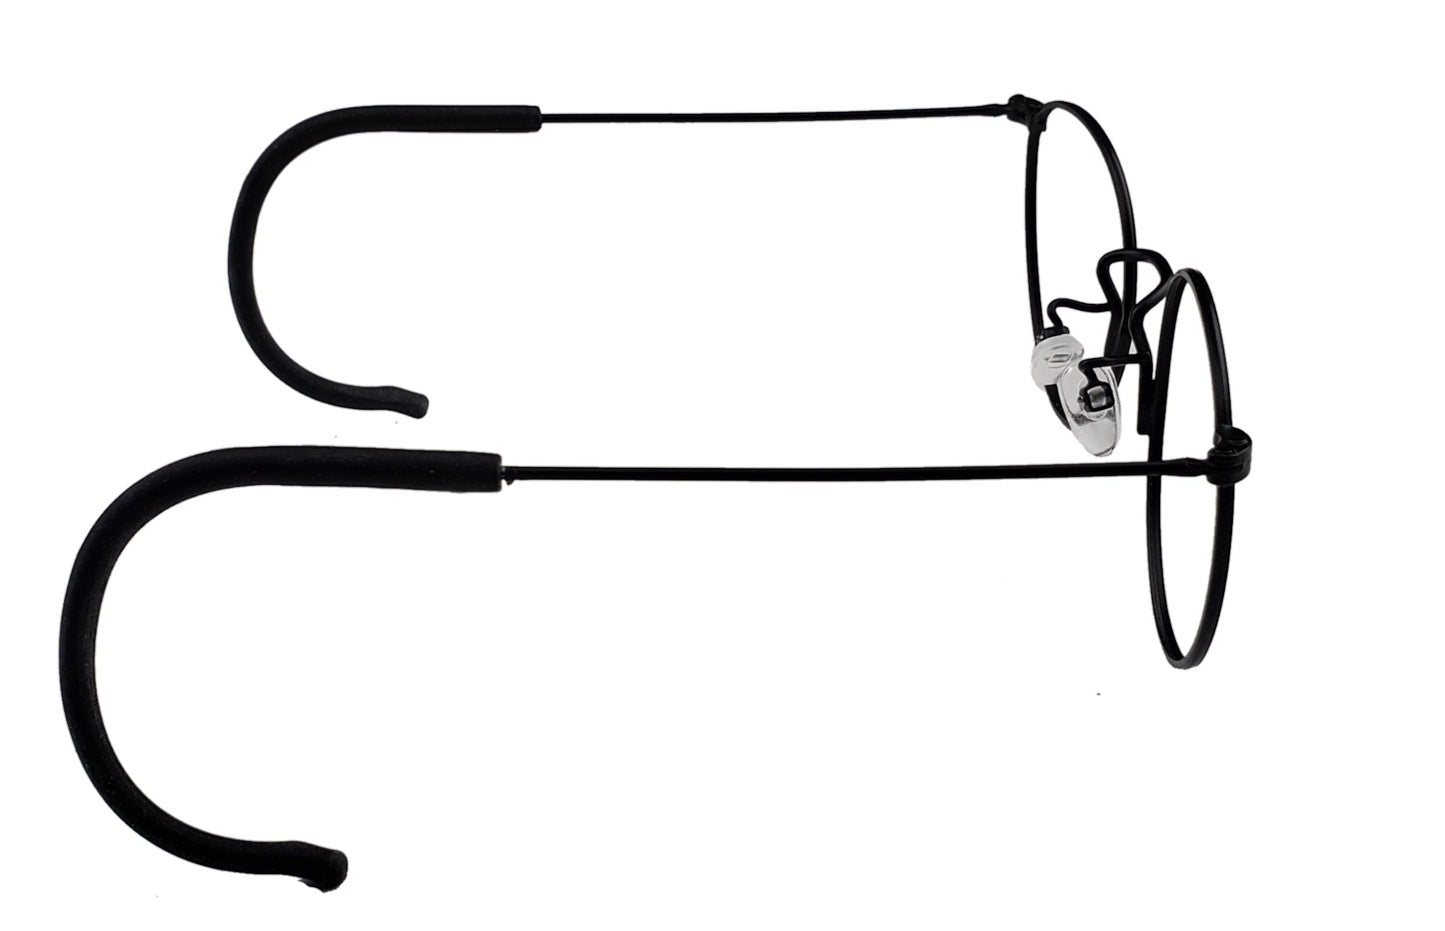 LMP Optical Supply Universal Cable Temple Kit Conversion Eyeglasses & Sunglasses